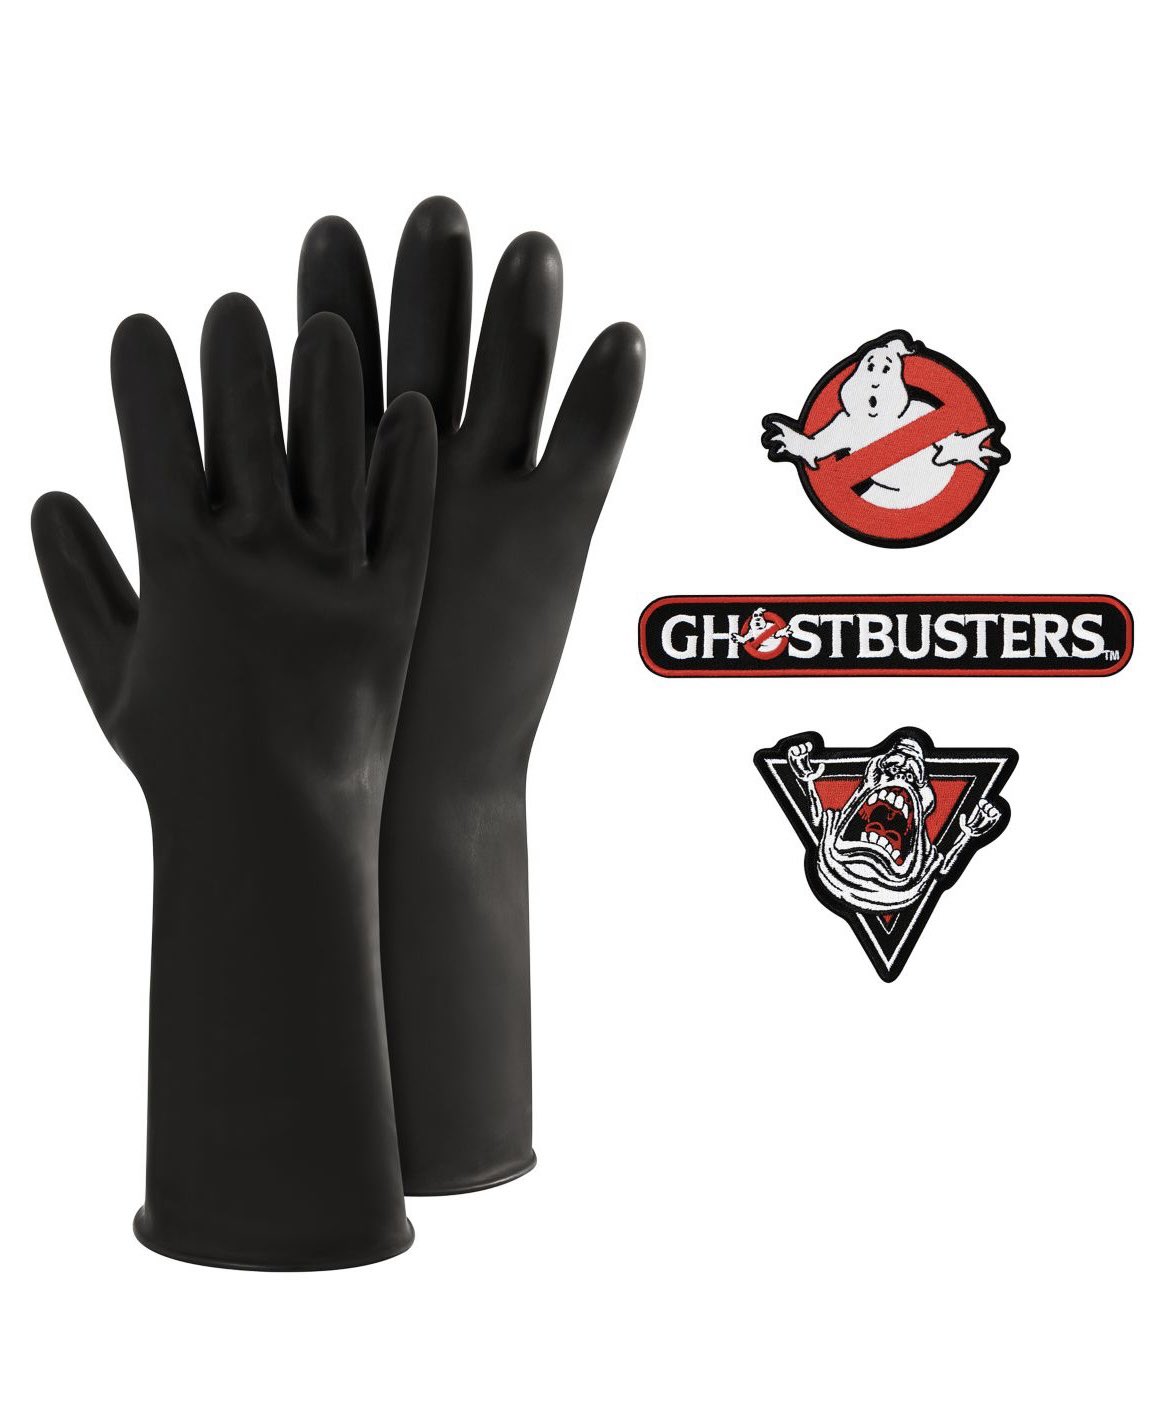 ¡Dale un vistazo al Ghostbusters Proton Pack de Spirit Halloween! 20